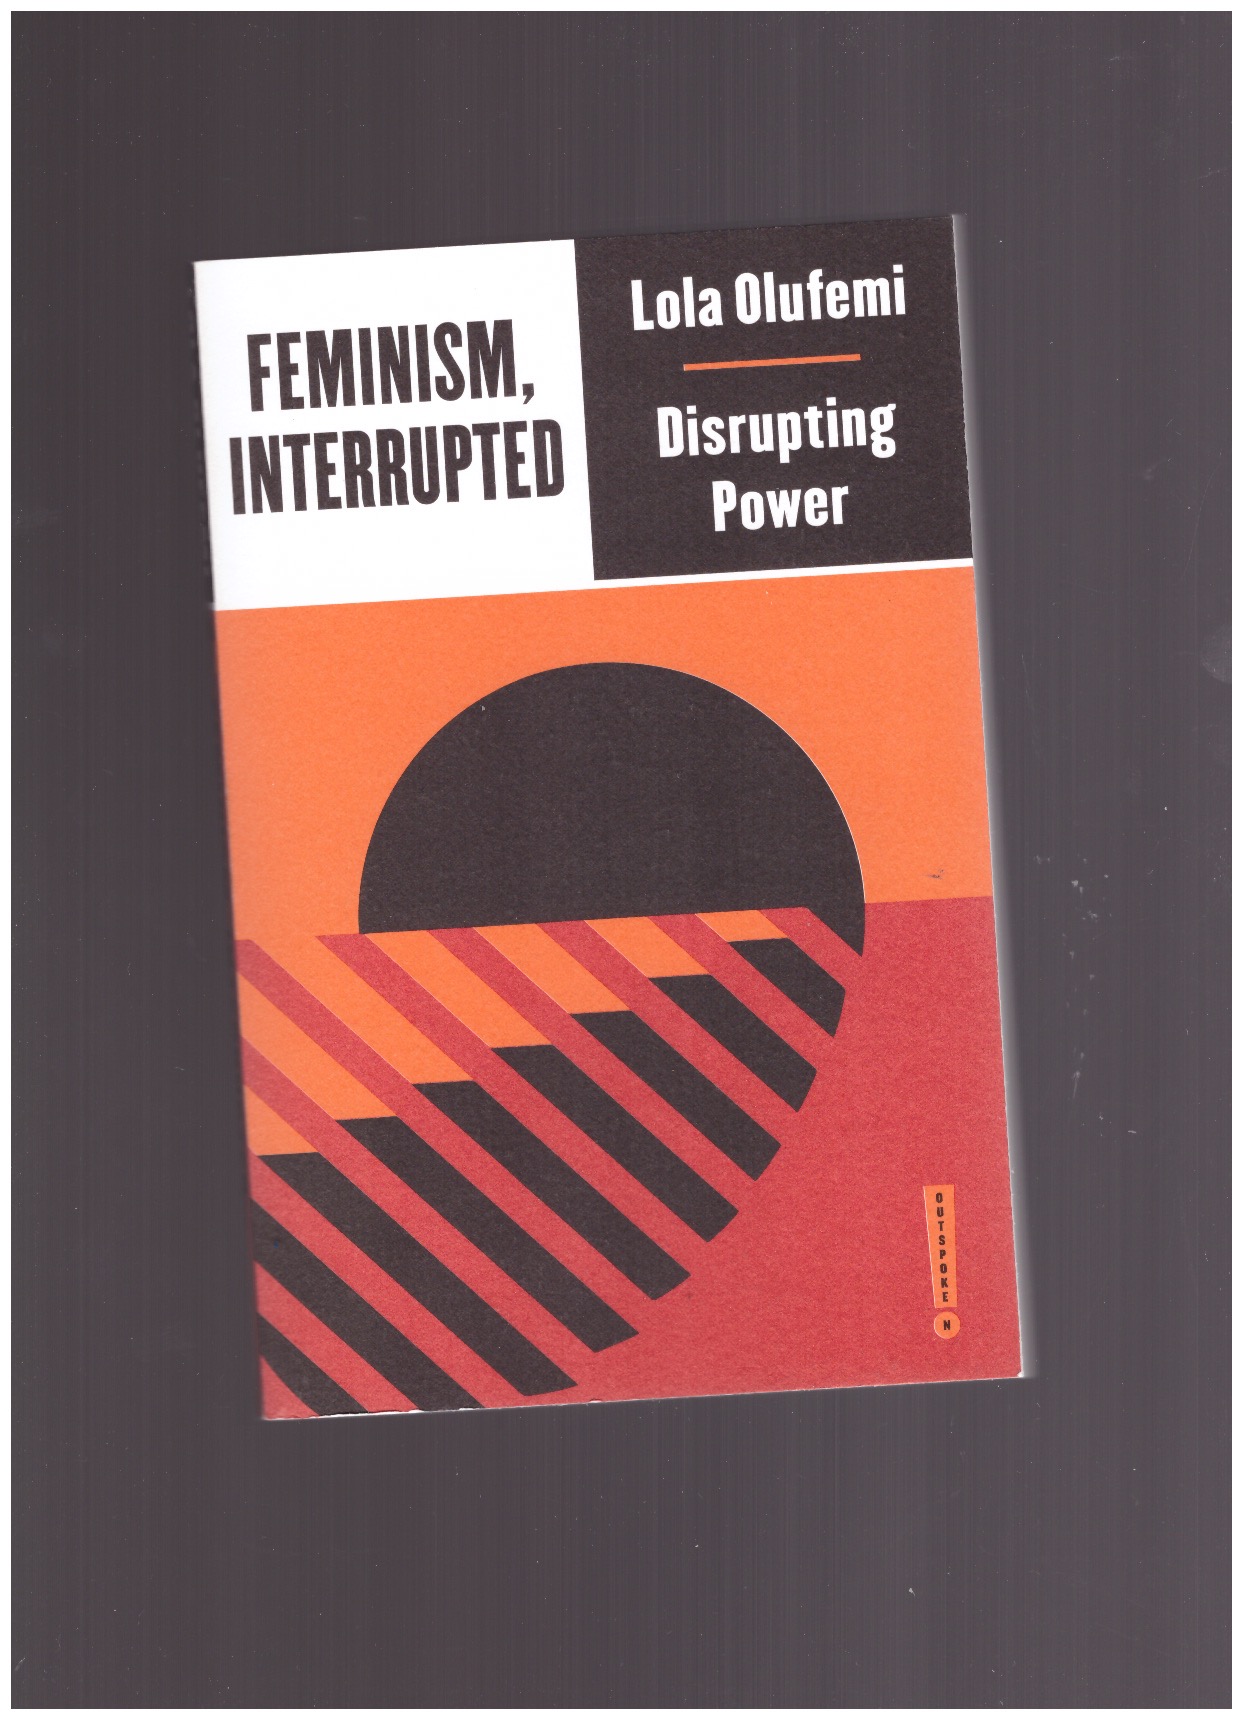 OLUFEMI, Lola - Feminism, Interrupted